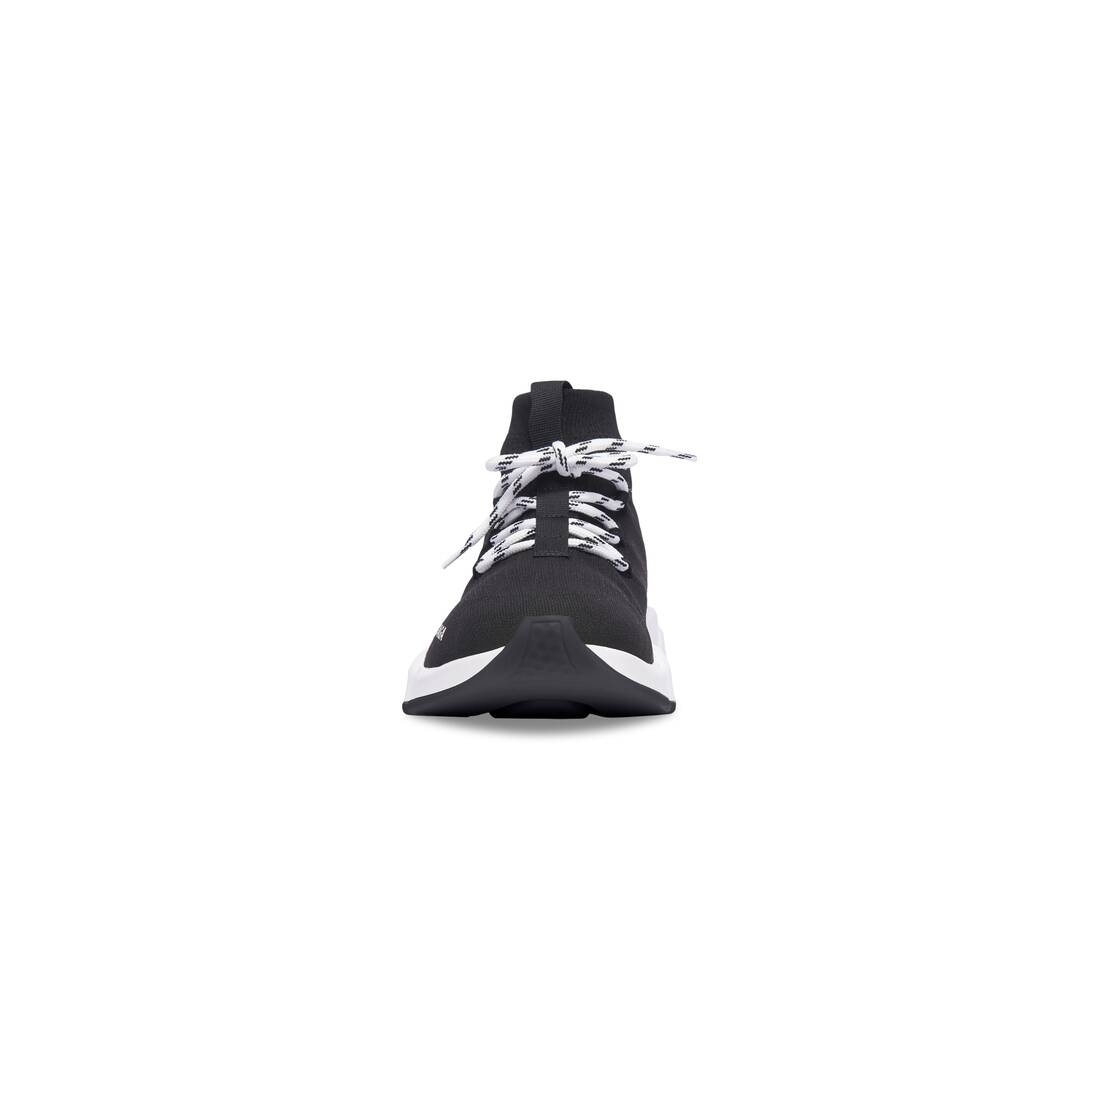 Men's Speed Lace-up Sneaker in Black/white - 2